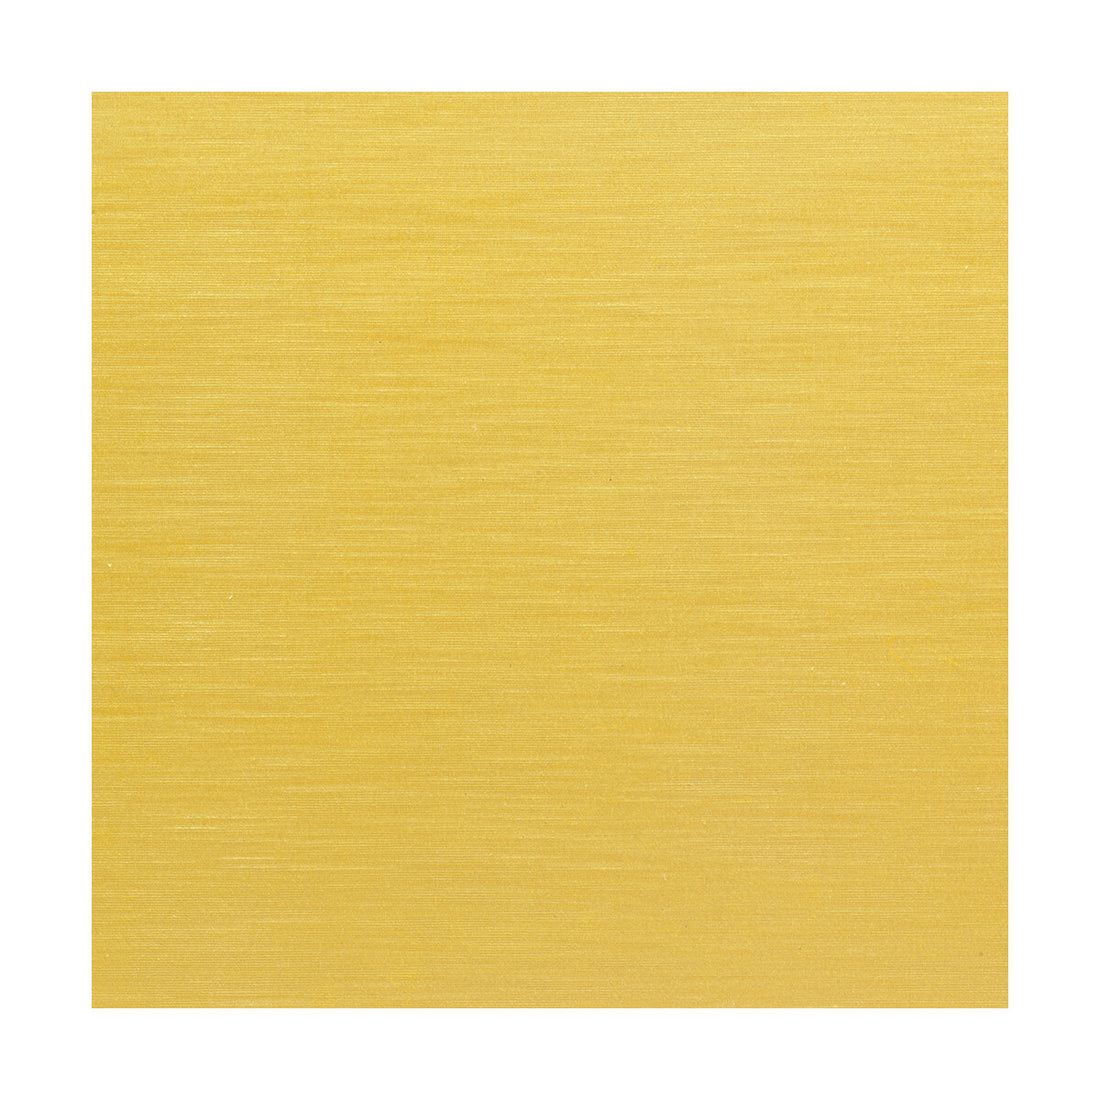 Santianes fabric in amarillo color - pattern LCT5371.019.0 - by Gaston y Daniela in the Lorenzo Castillo III collection